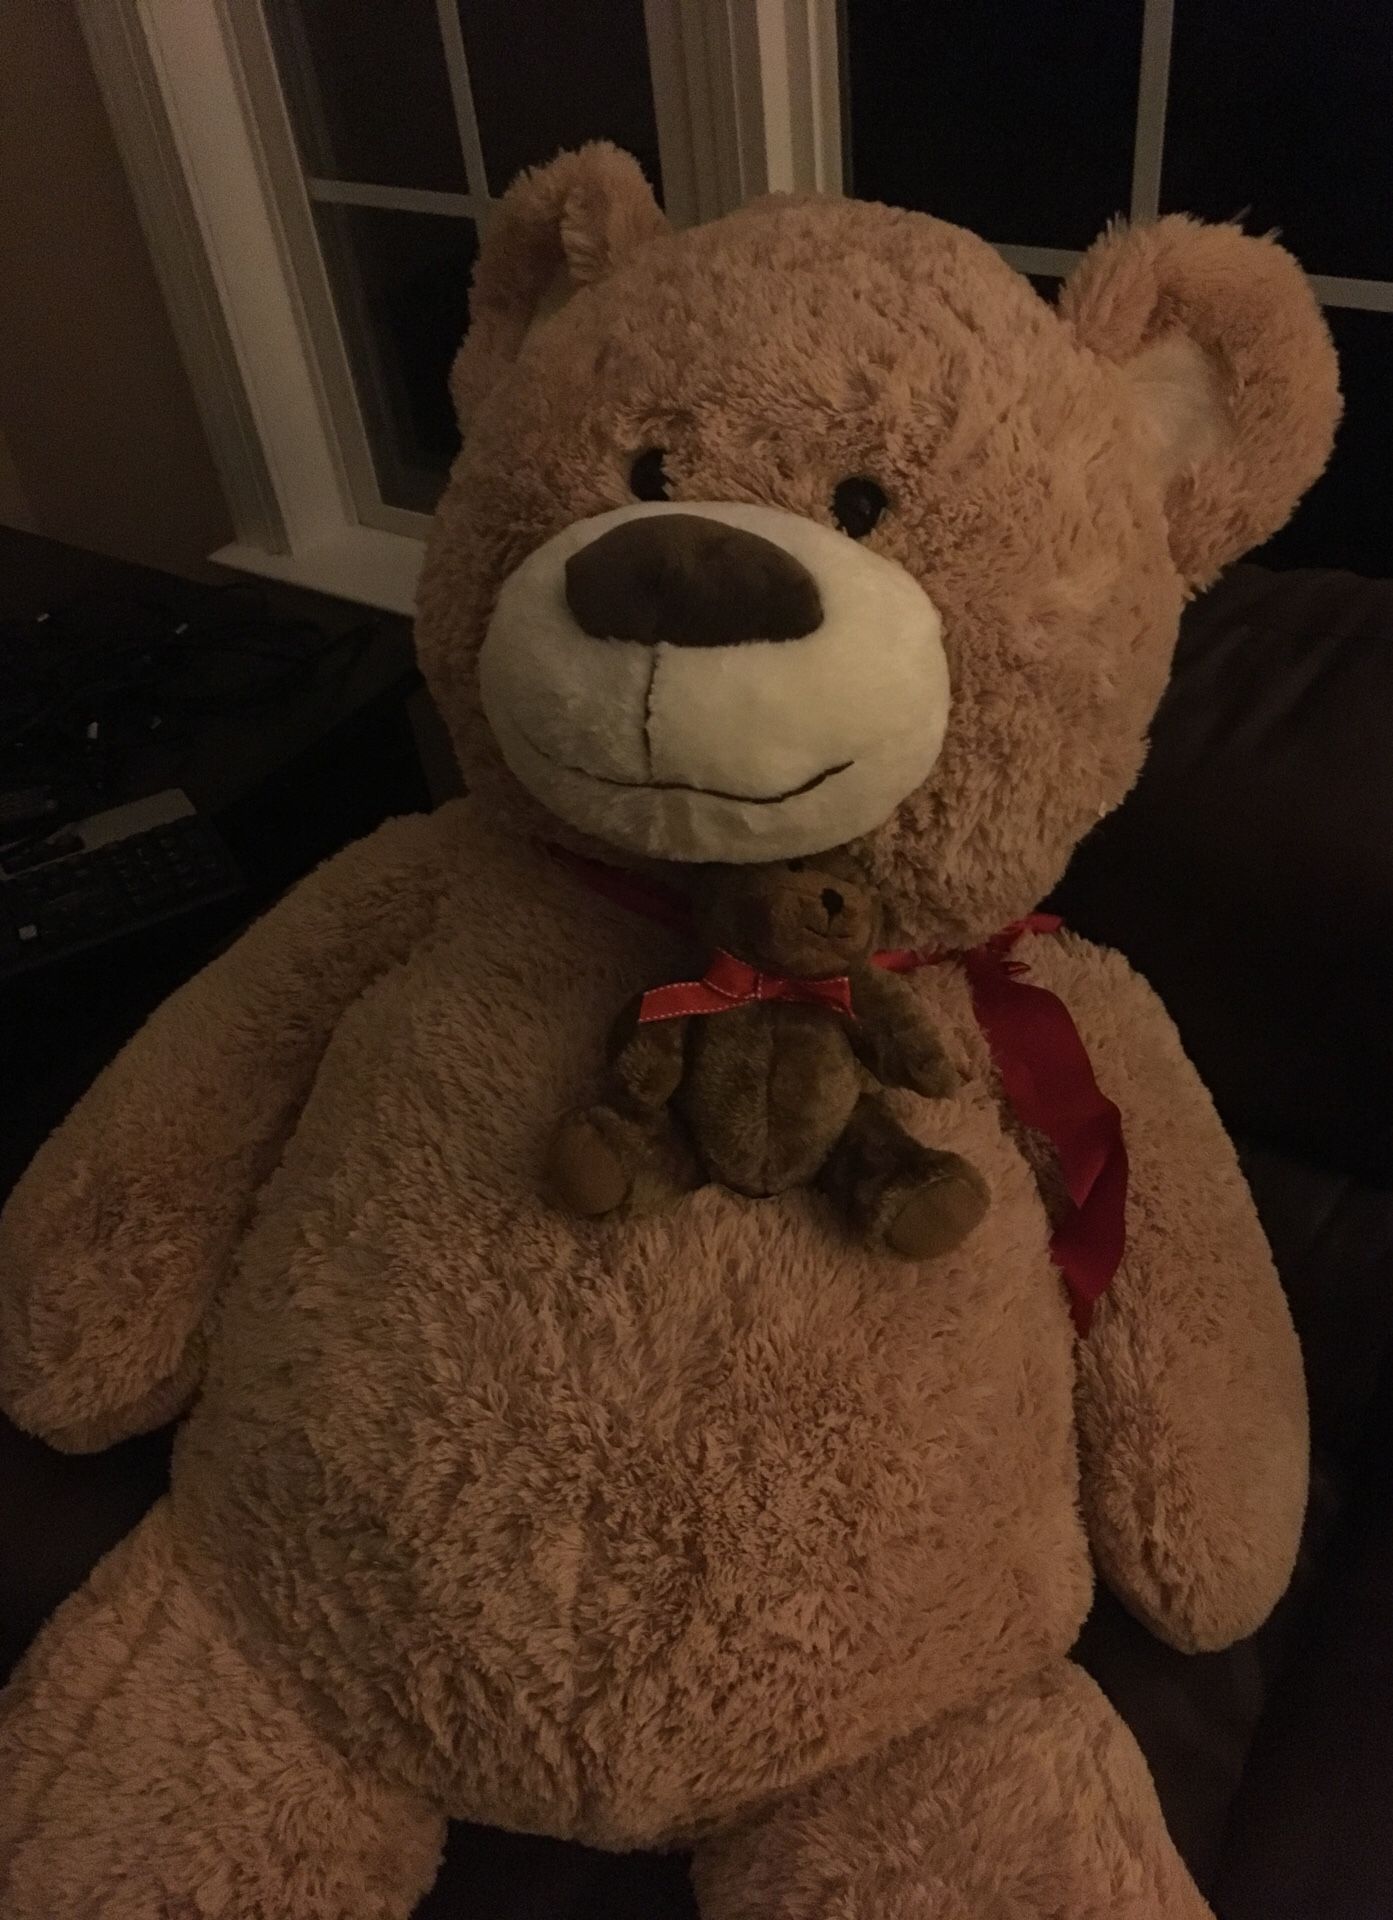 Huge teddy bear